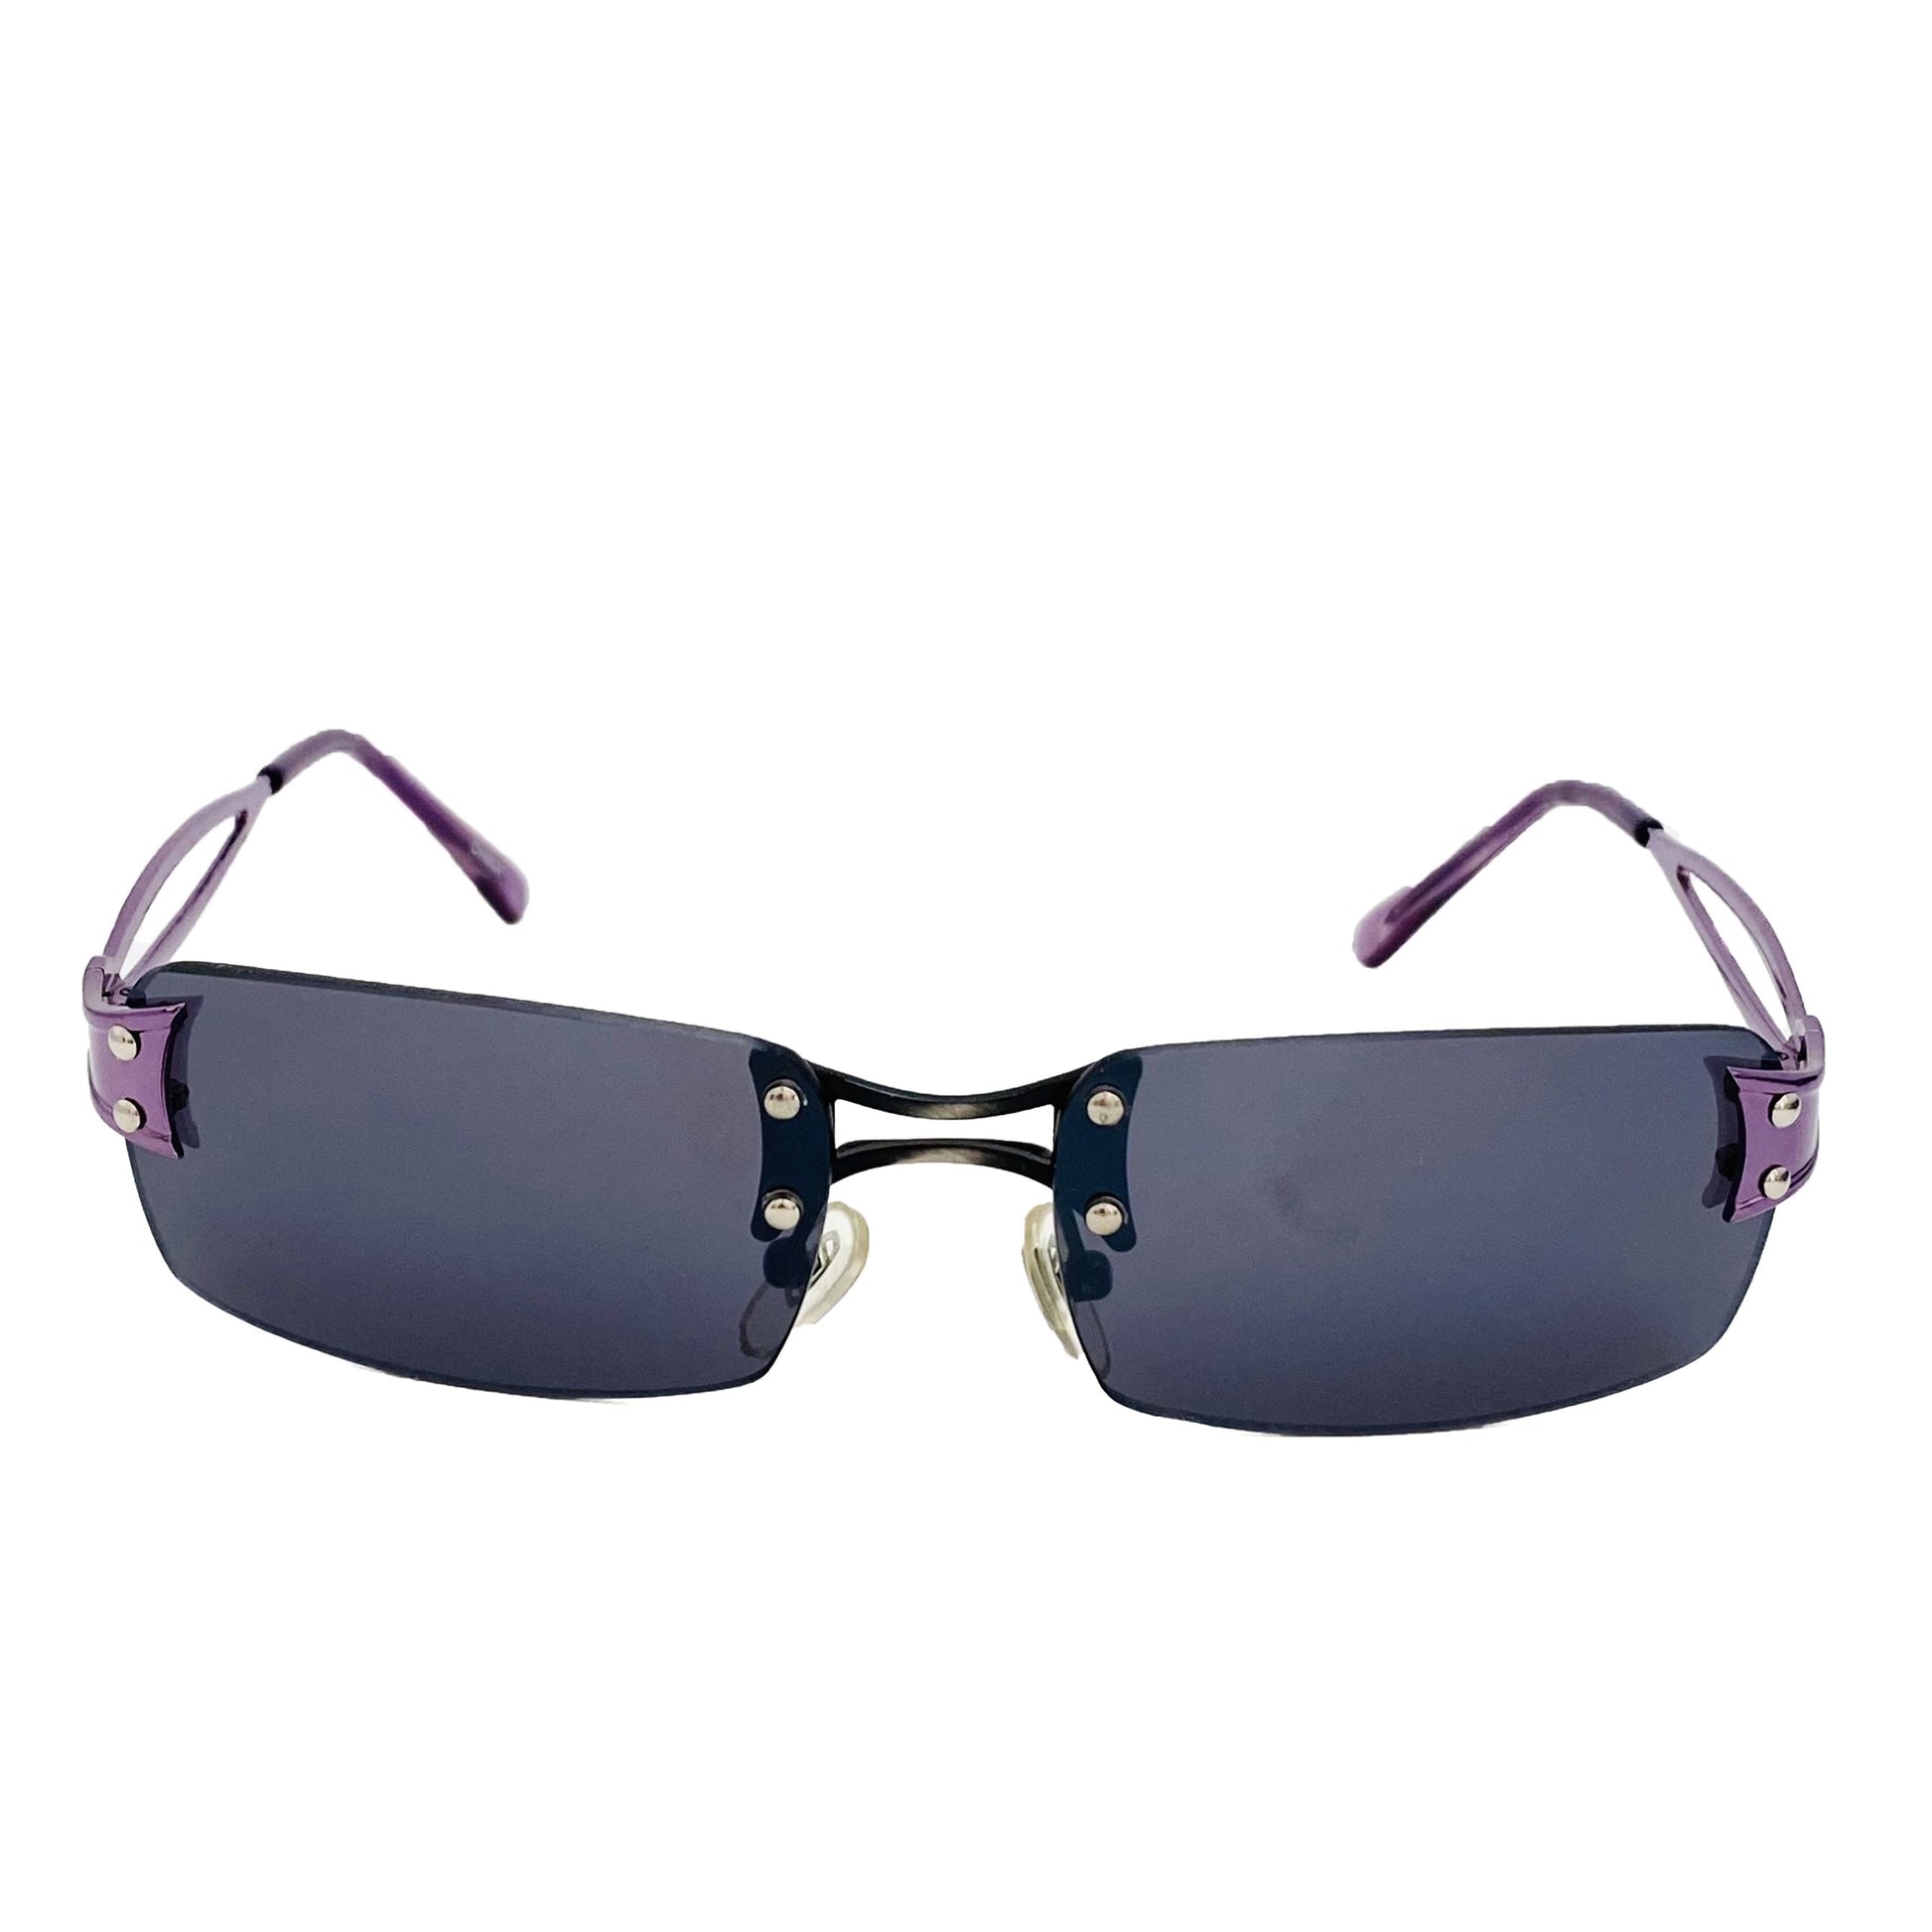 cyber y2k style, grey lens, frameless, genuine vintage sunglasses with purple frame